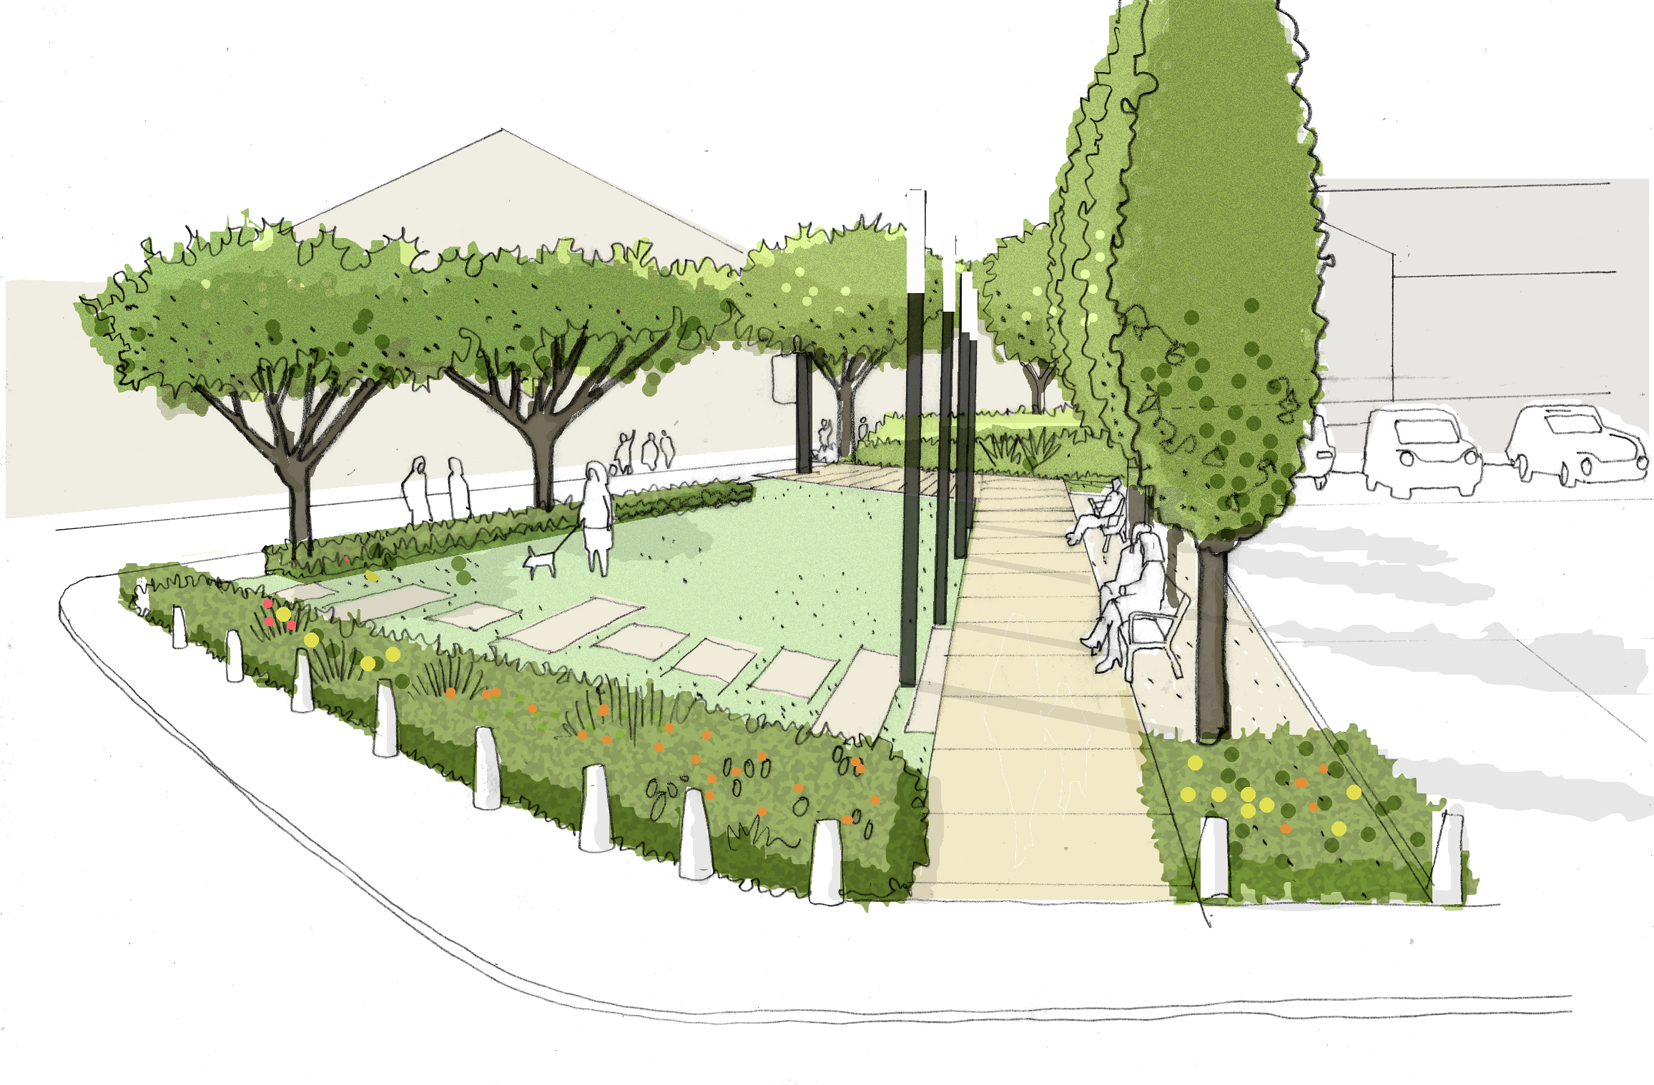 Custom house lane urban park proposal illustration